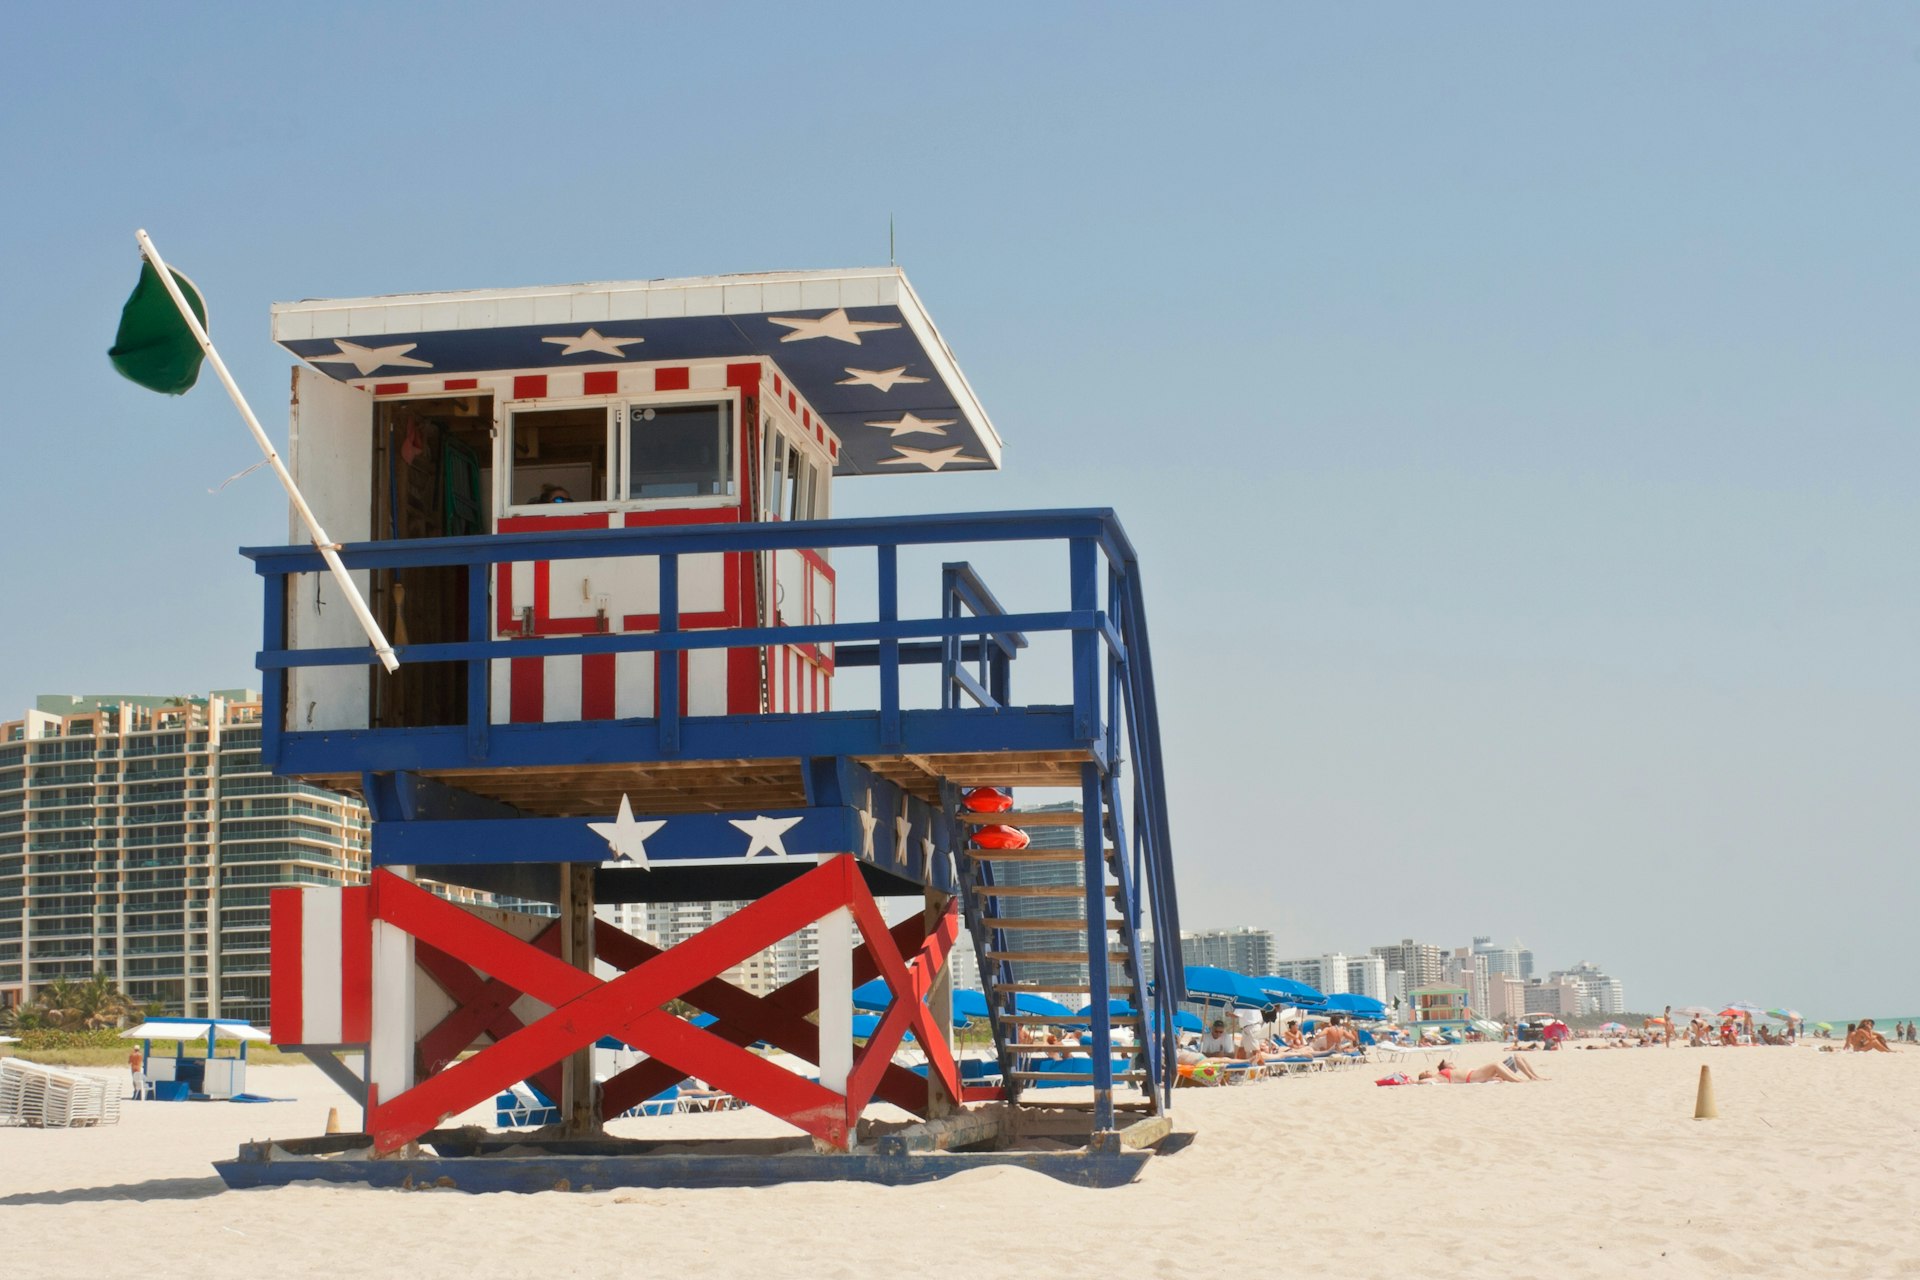 A lifeguard station on the beach in Miami Beach, Florida, USA